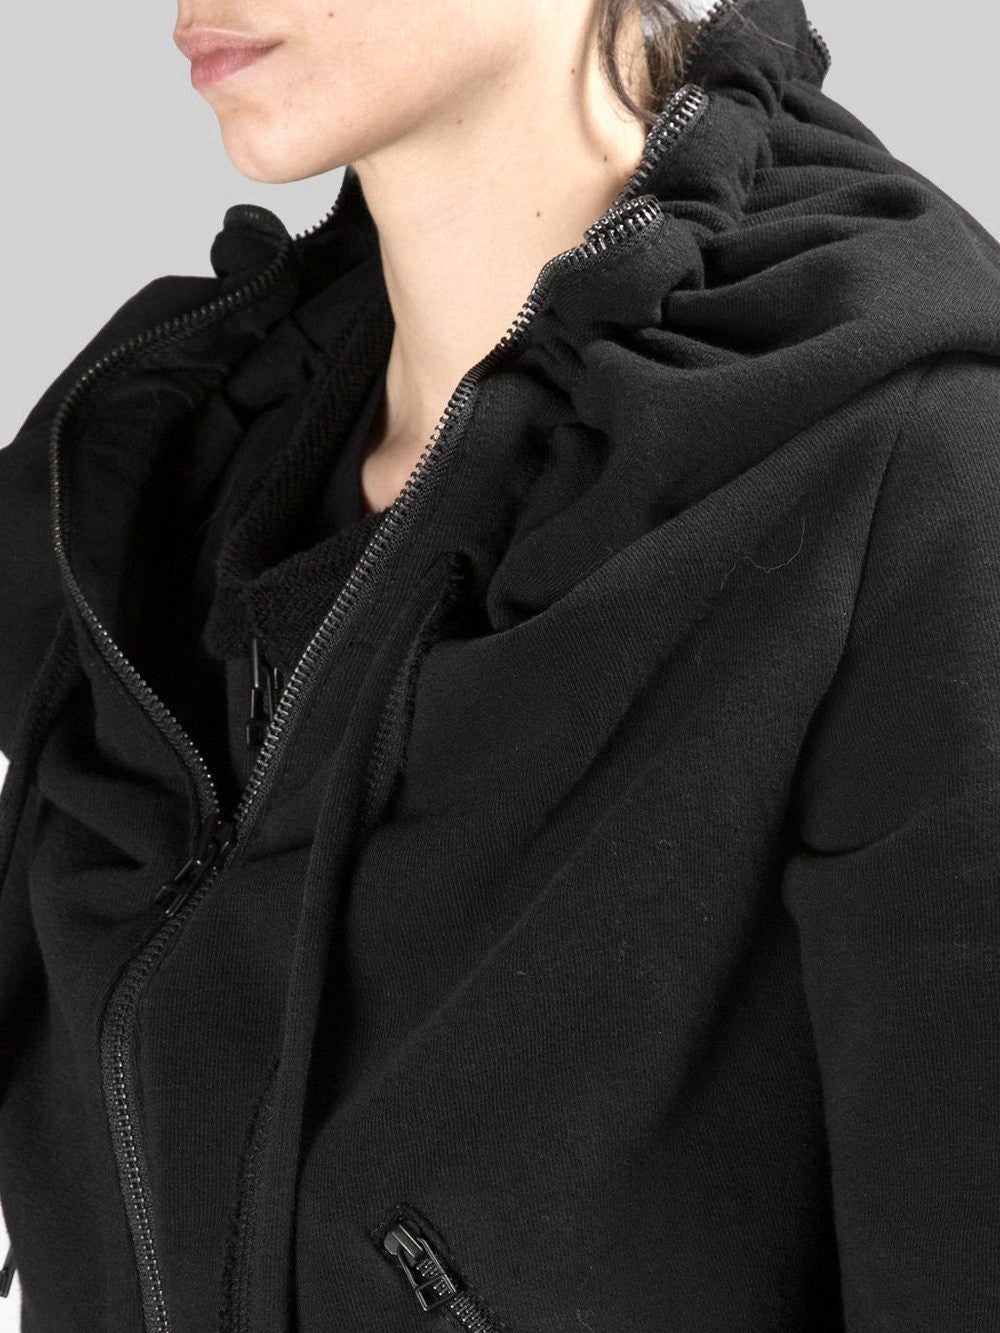 Asymmetric Raw Cut Seam Detail Sweaters Hoodie / Zipped Side Pockets  - Bottom Drawstrings